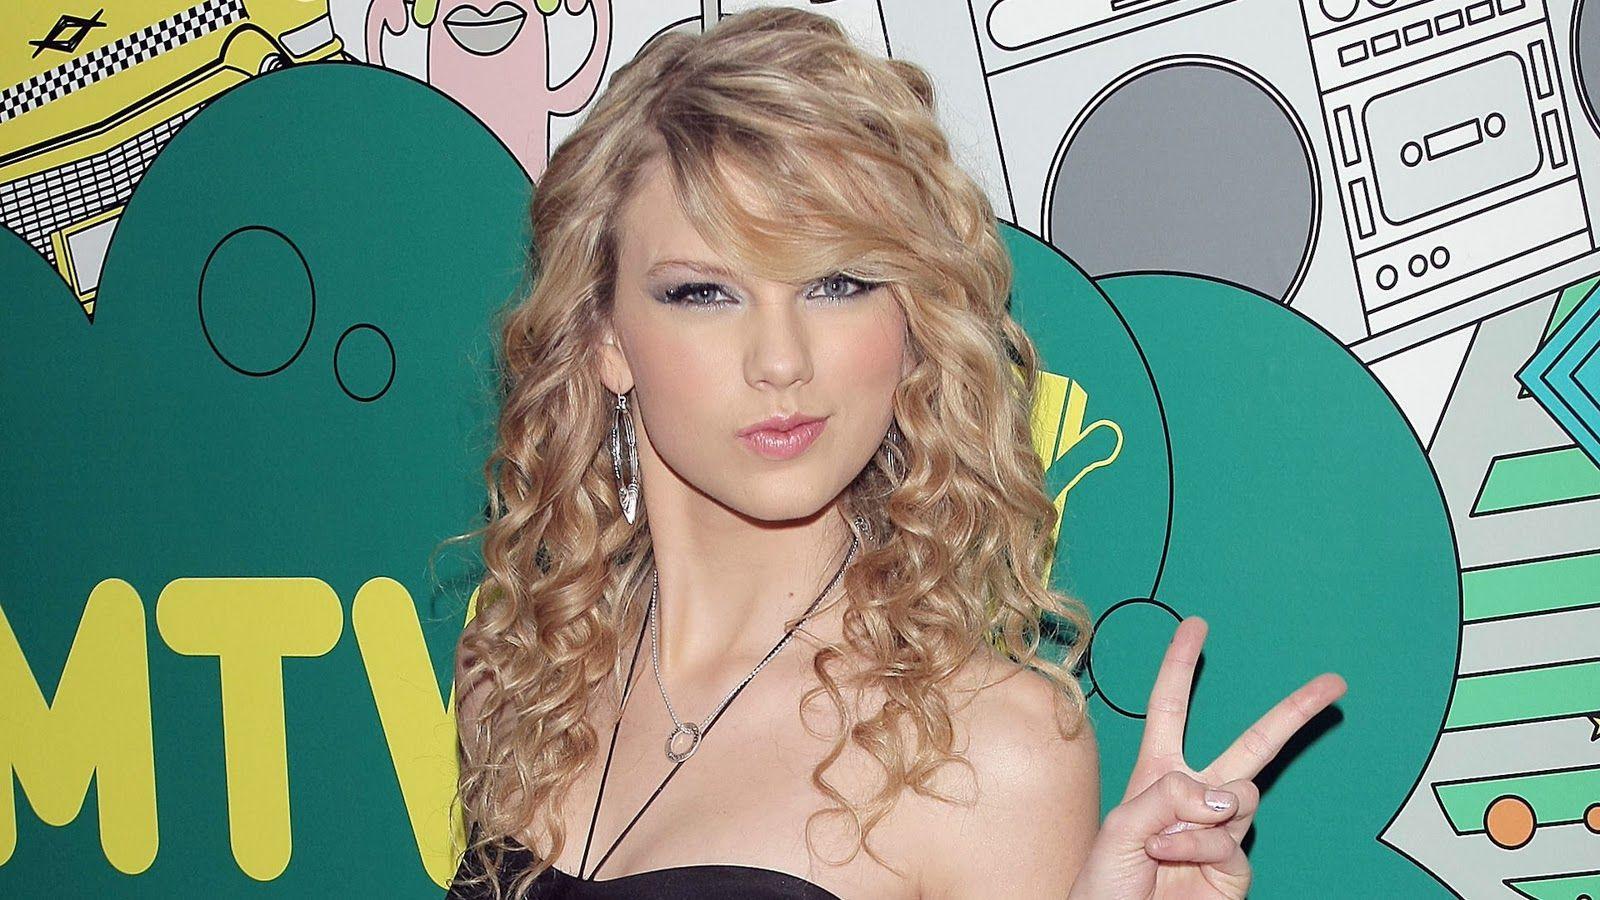 Hot HD Wallpaper: Taylor Swift Wallpaper HD